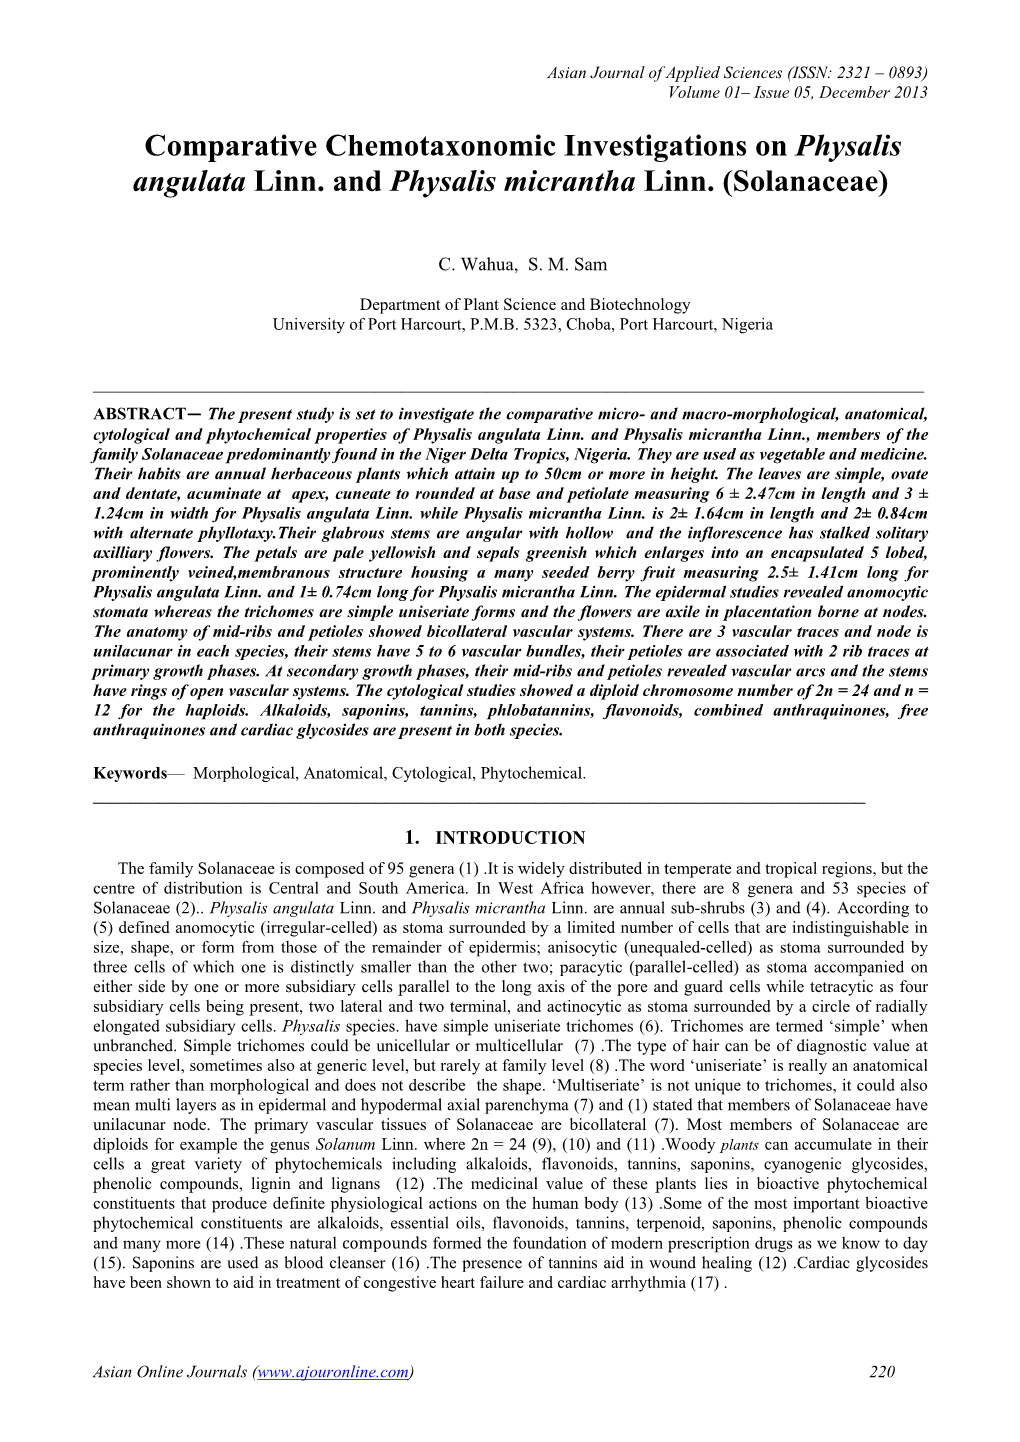 Comparative Chemotaxonomic Investigations on Physalis Angulata Linn